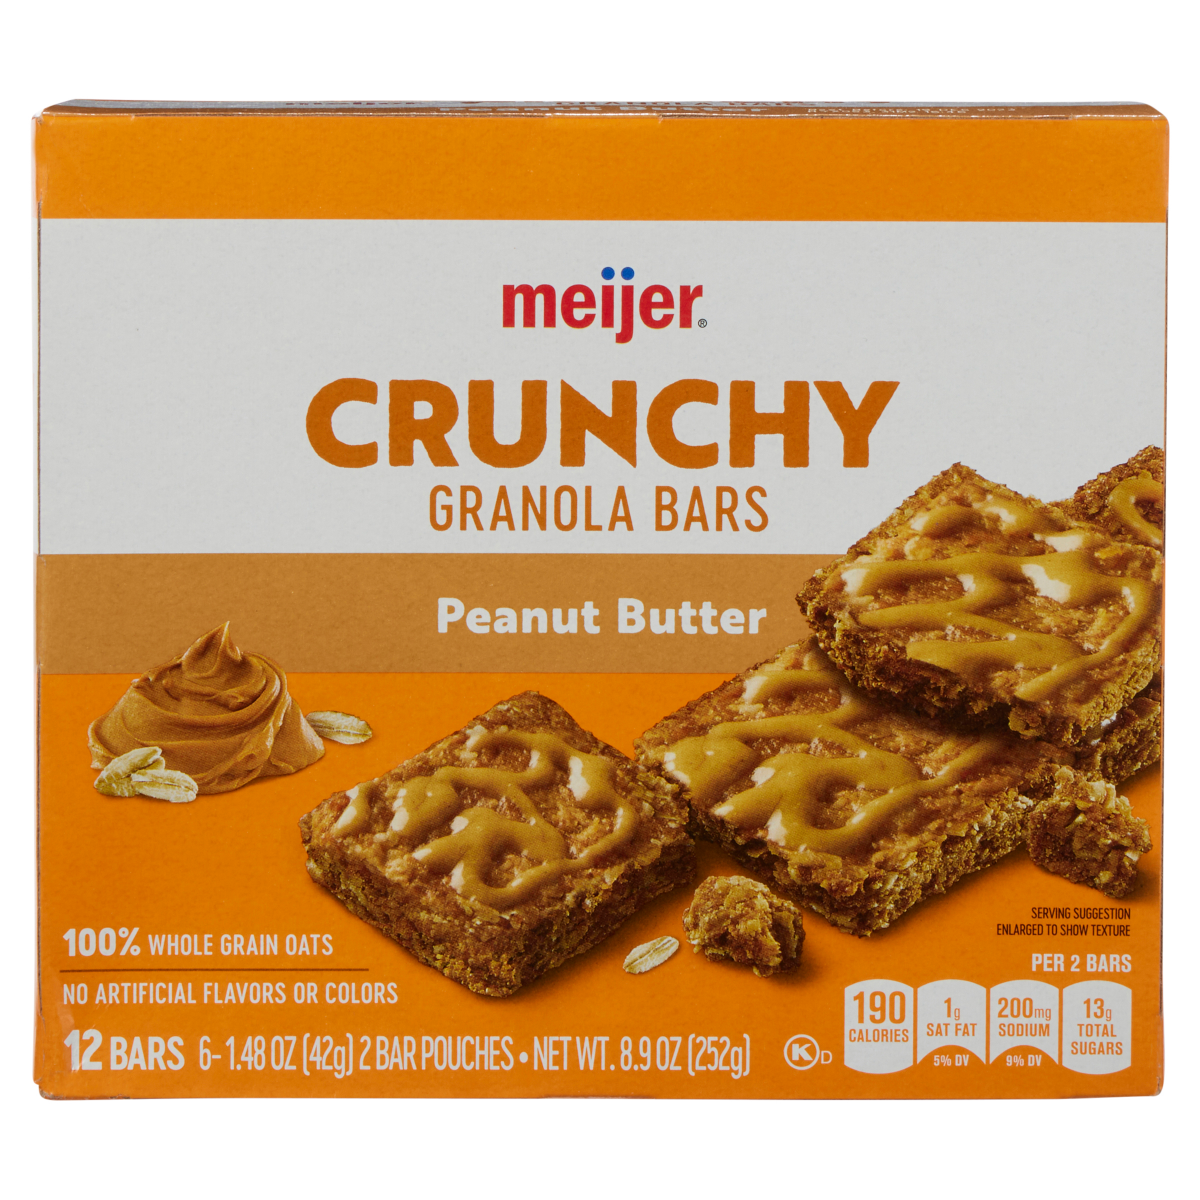 slide 1 of 5, Meijer Crunchy Granola Bars, Peanut Butter, 6-2 Bar Pouches, 6/1.48OZ  